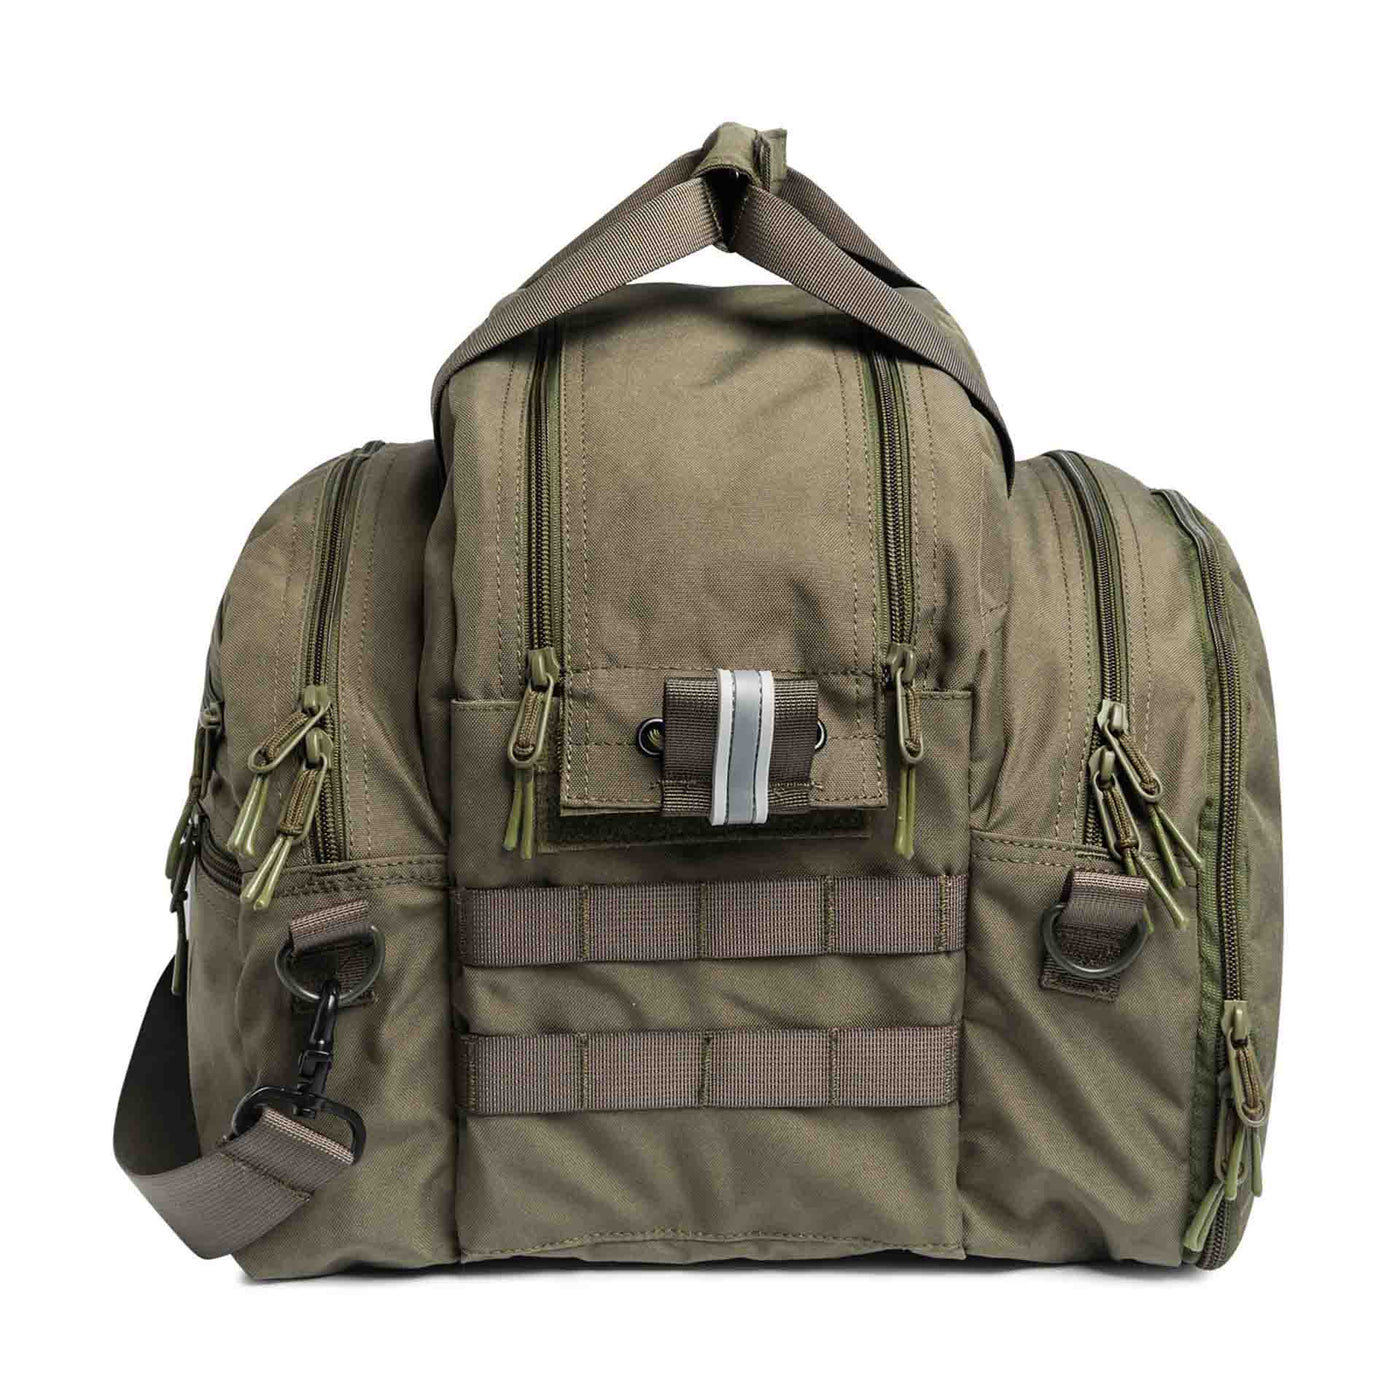 Tactical Range Bag close up